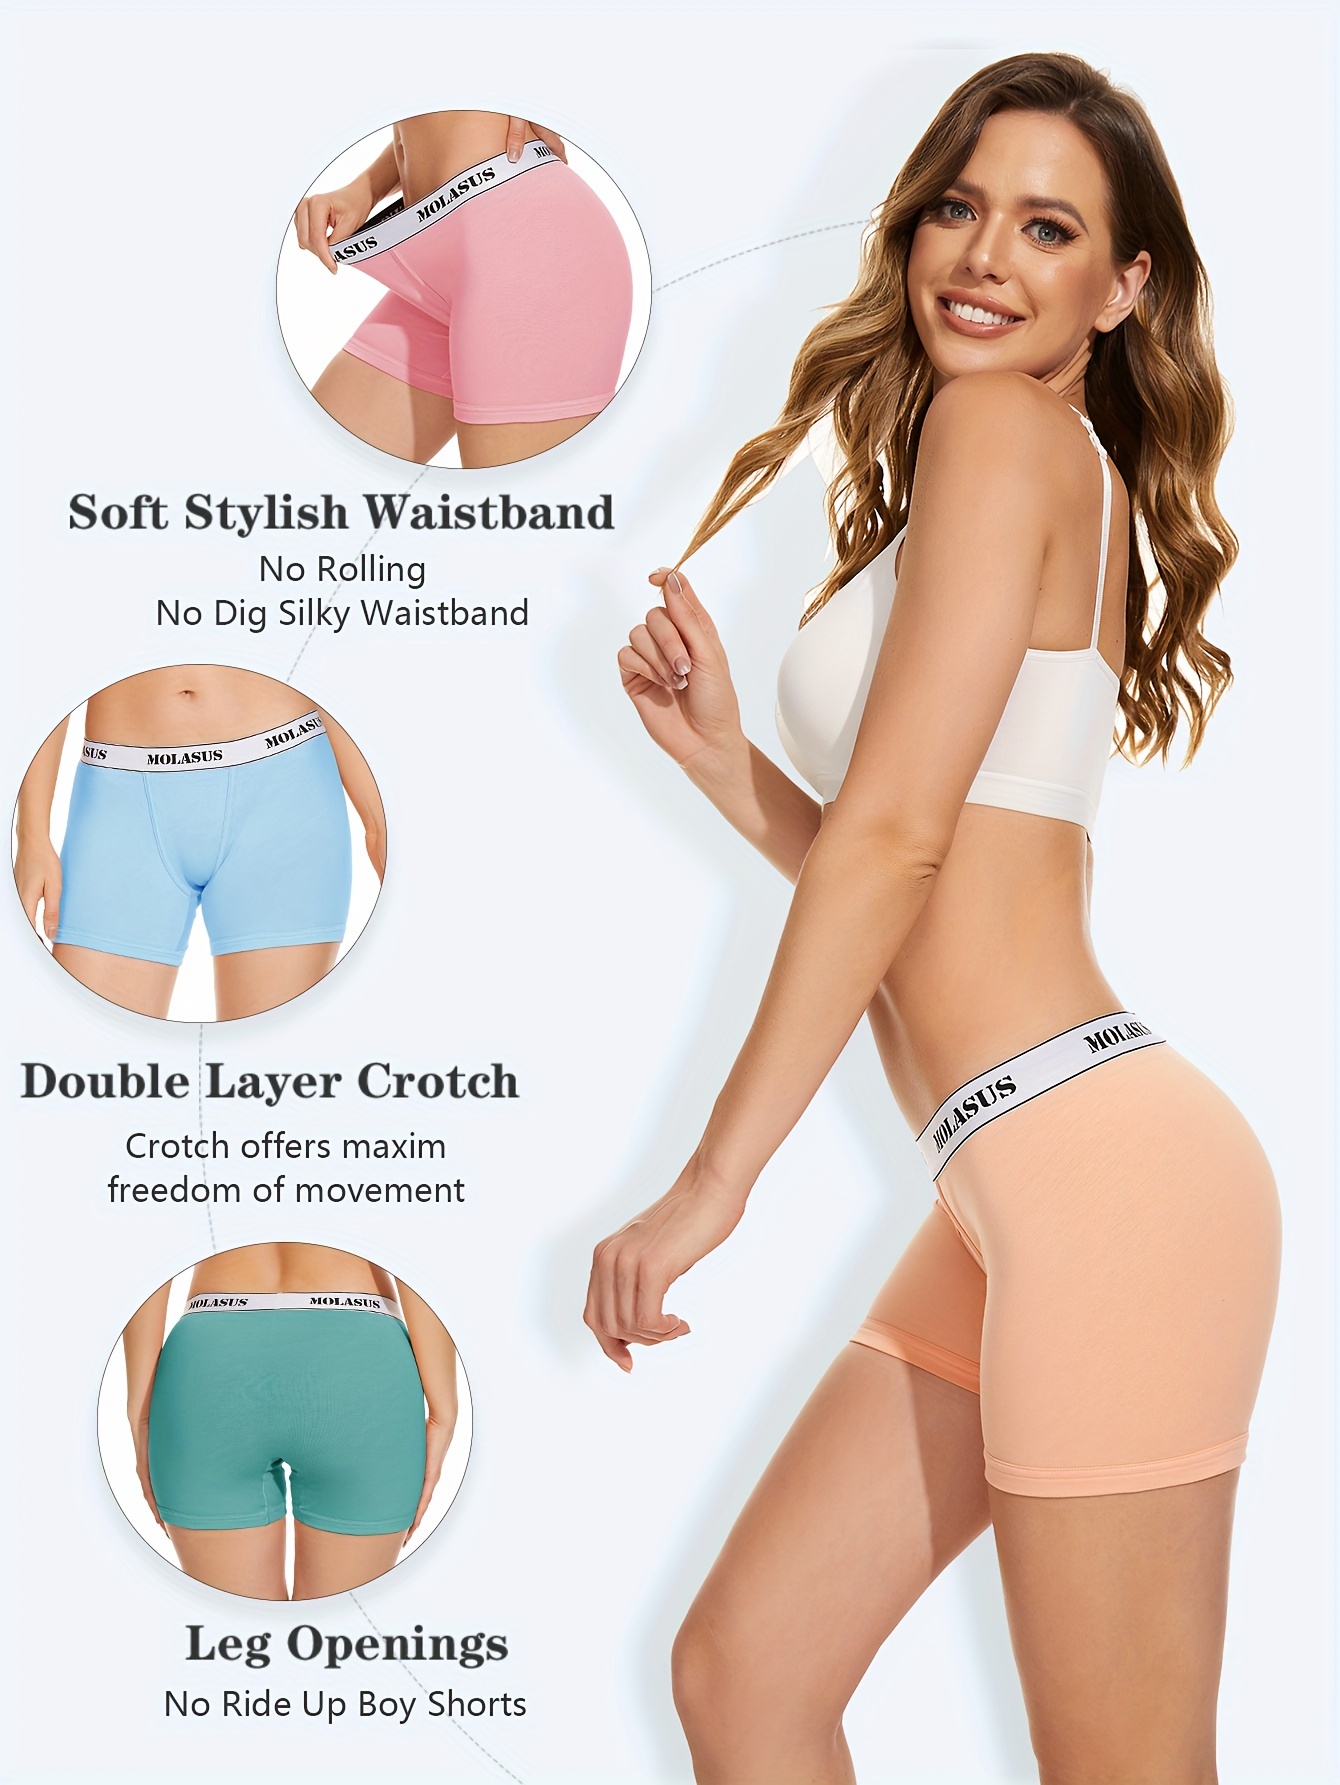  POKARLA 4.5 Inseam Womens Trunks Underwear Soft